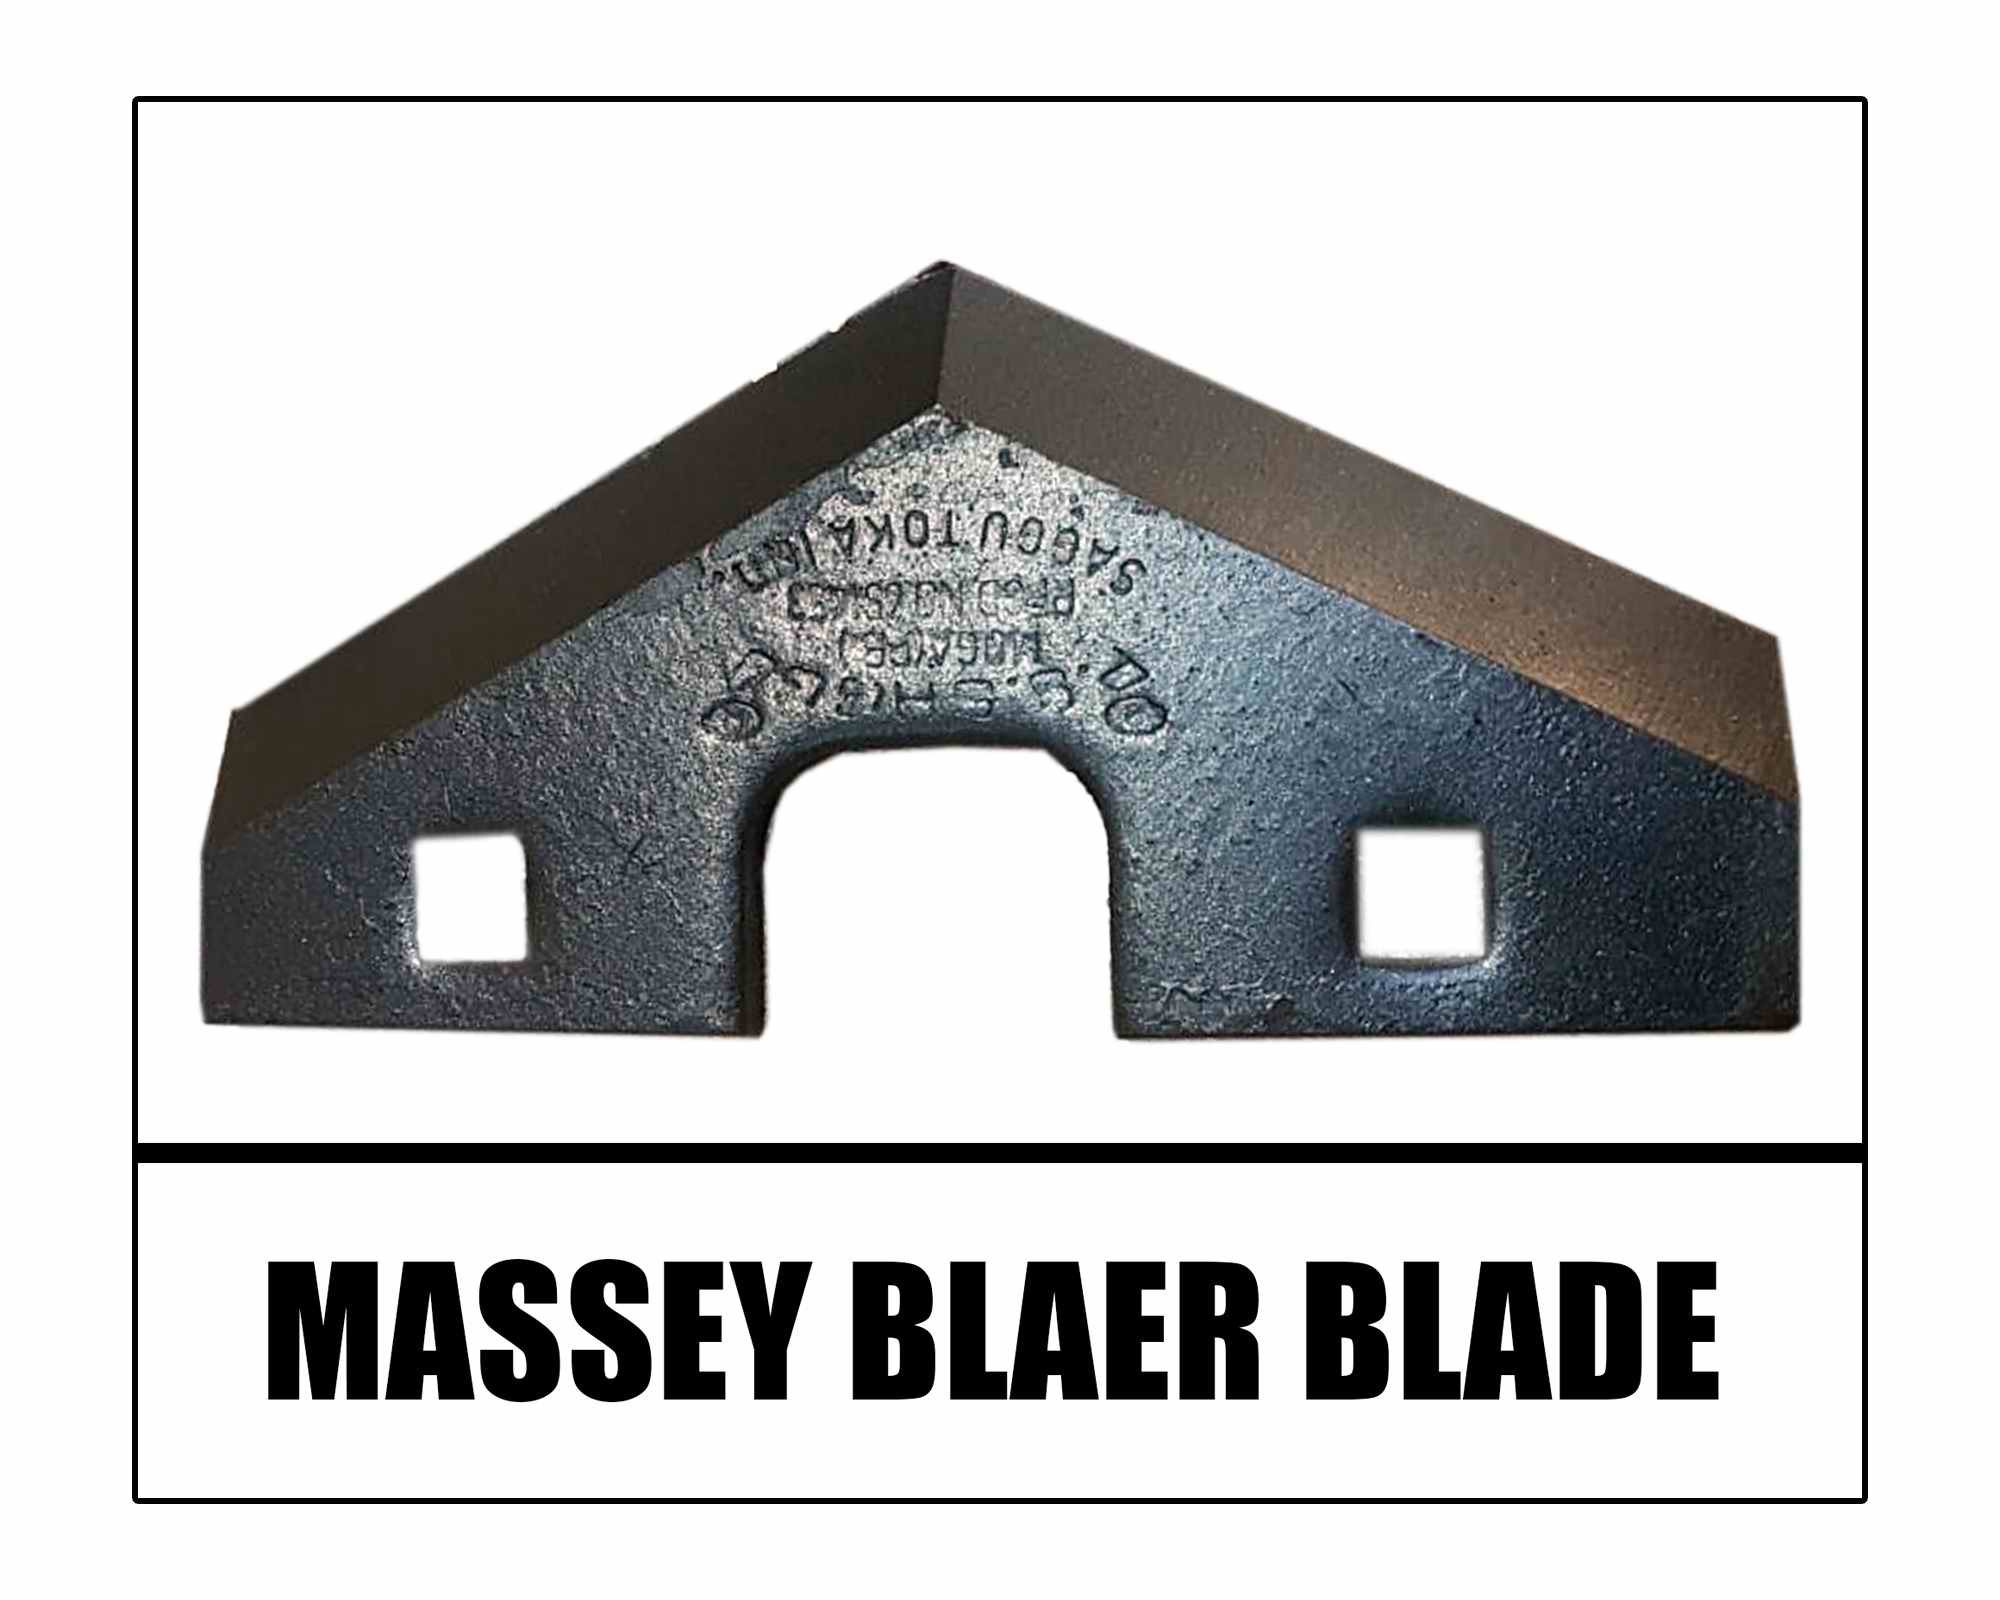 Massey Blaer Blade